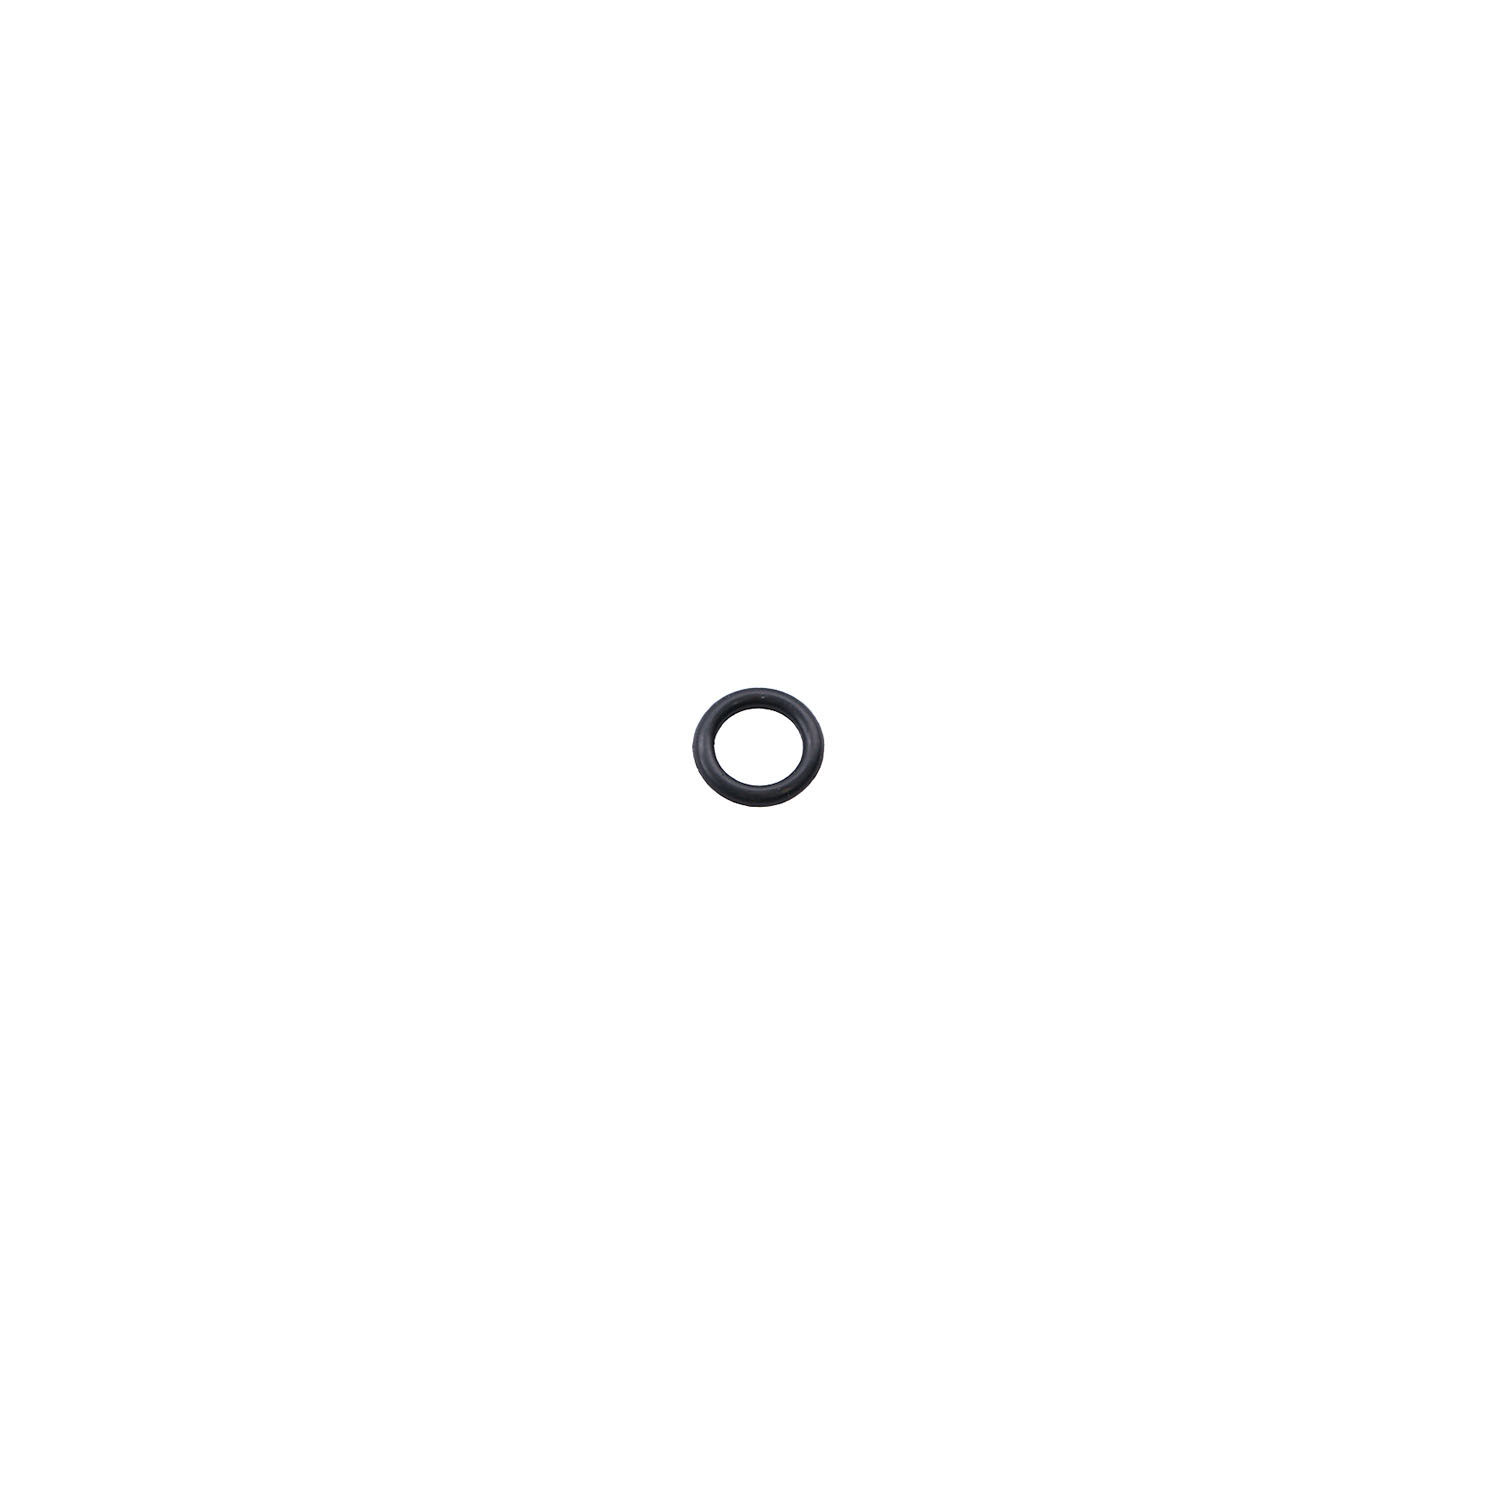 Кольцо уплотнительное 6*l,8 ( O-ring 6*l,8 ) RT-5875 поз.37